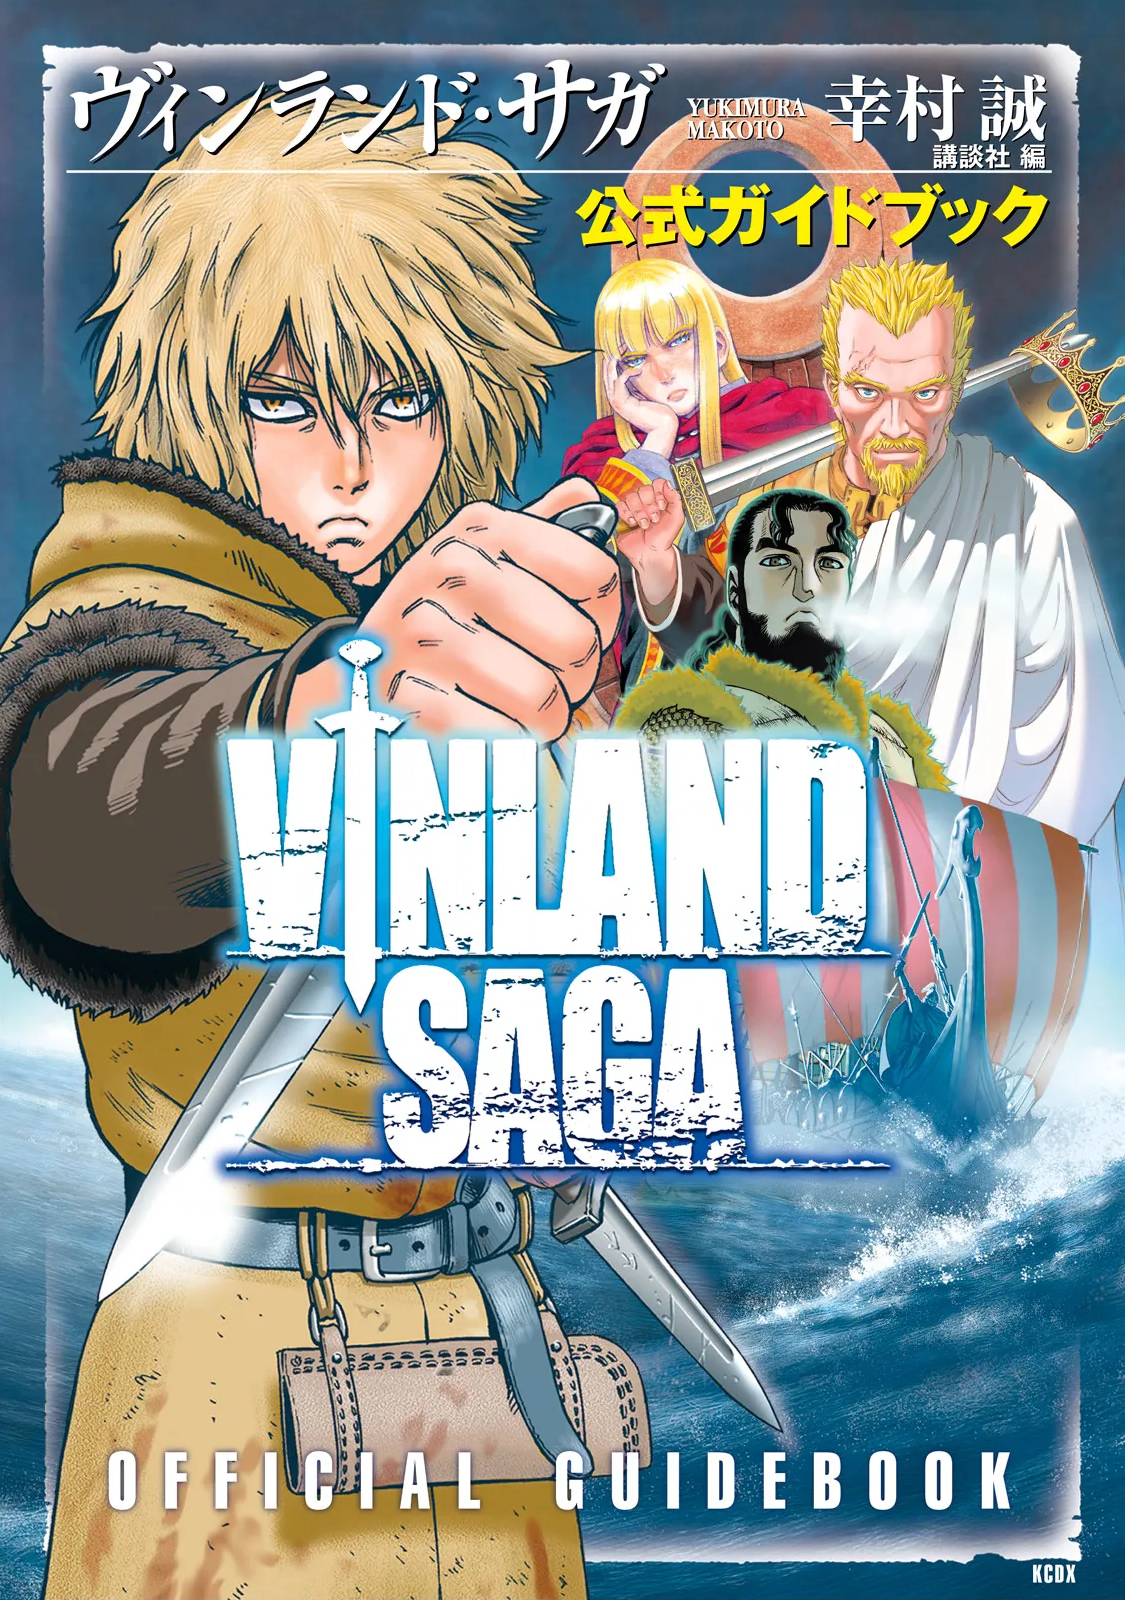 TVアニメ「ヴィンランド・サガ」/「VINLAND SAGA」Official on X